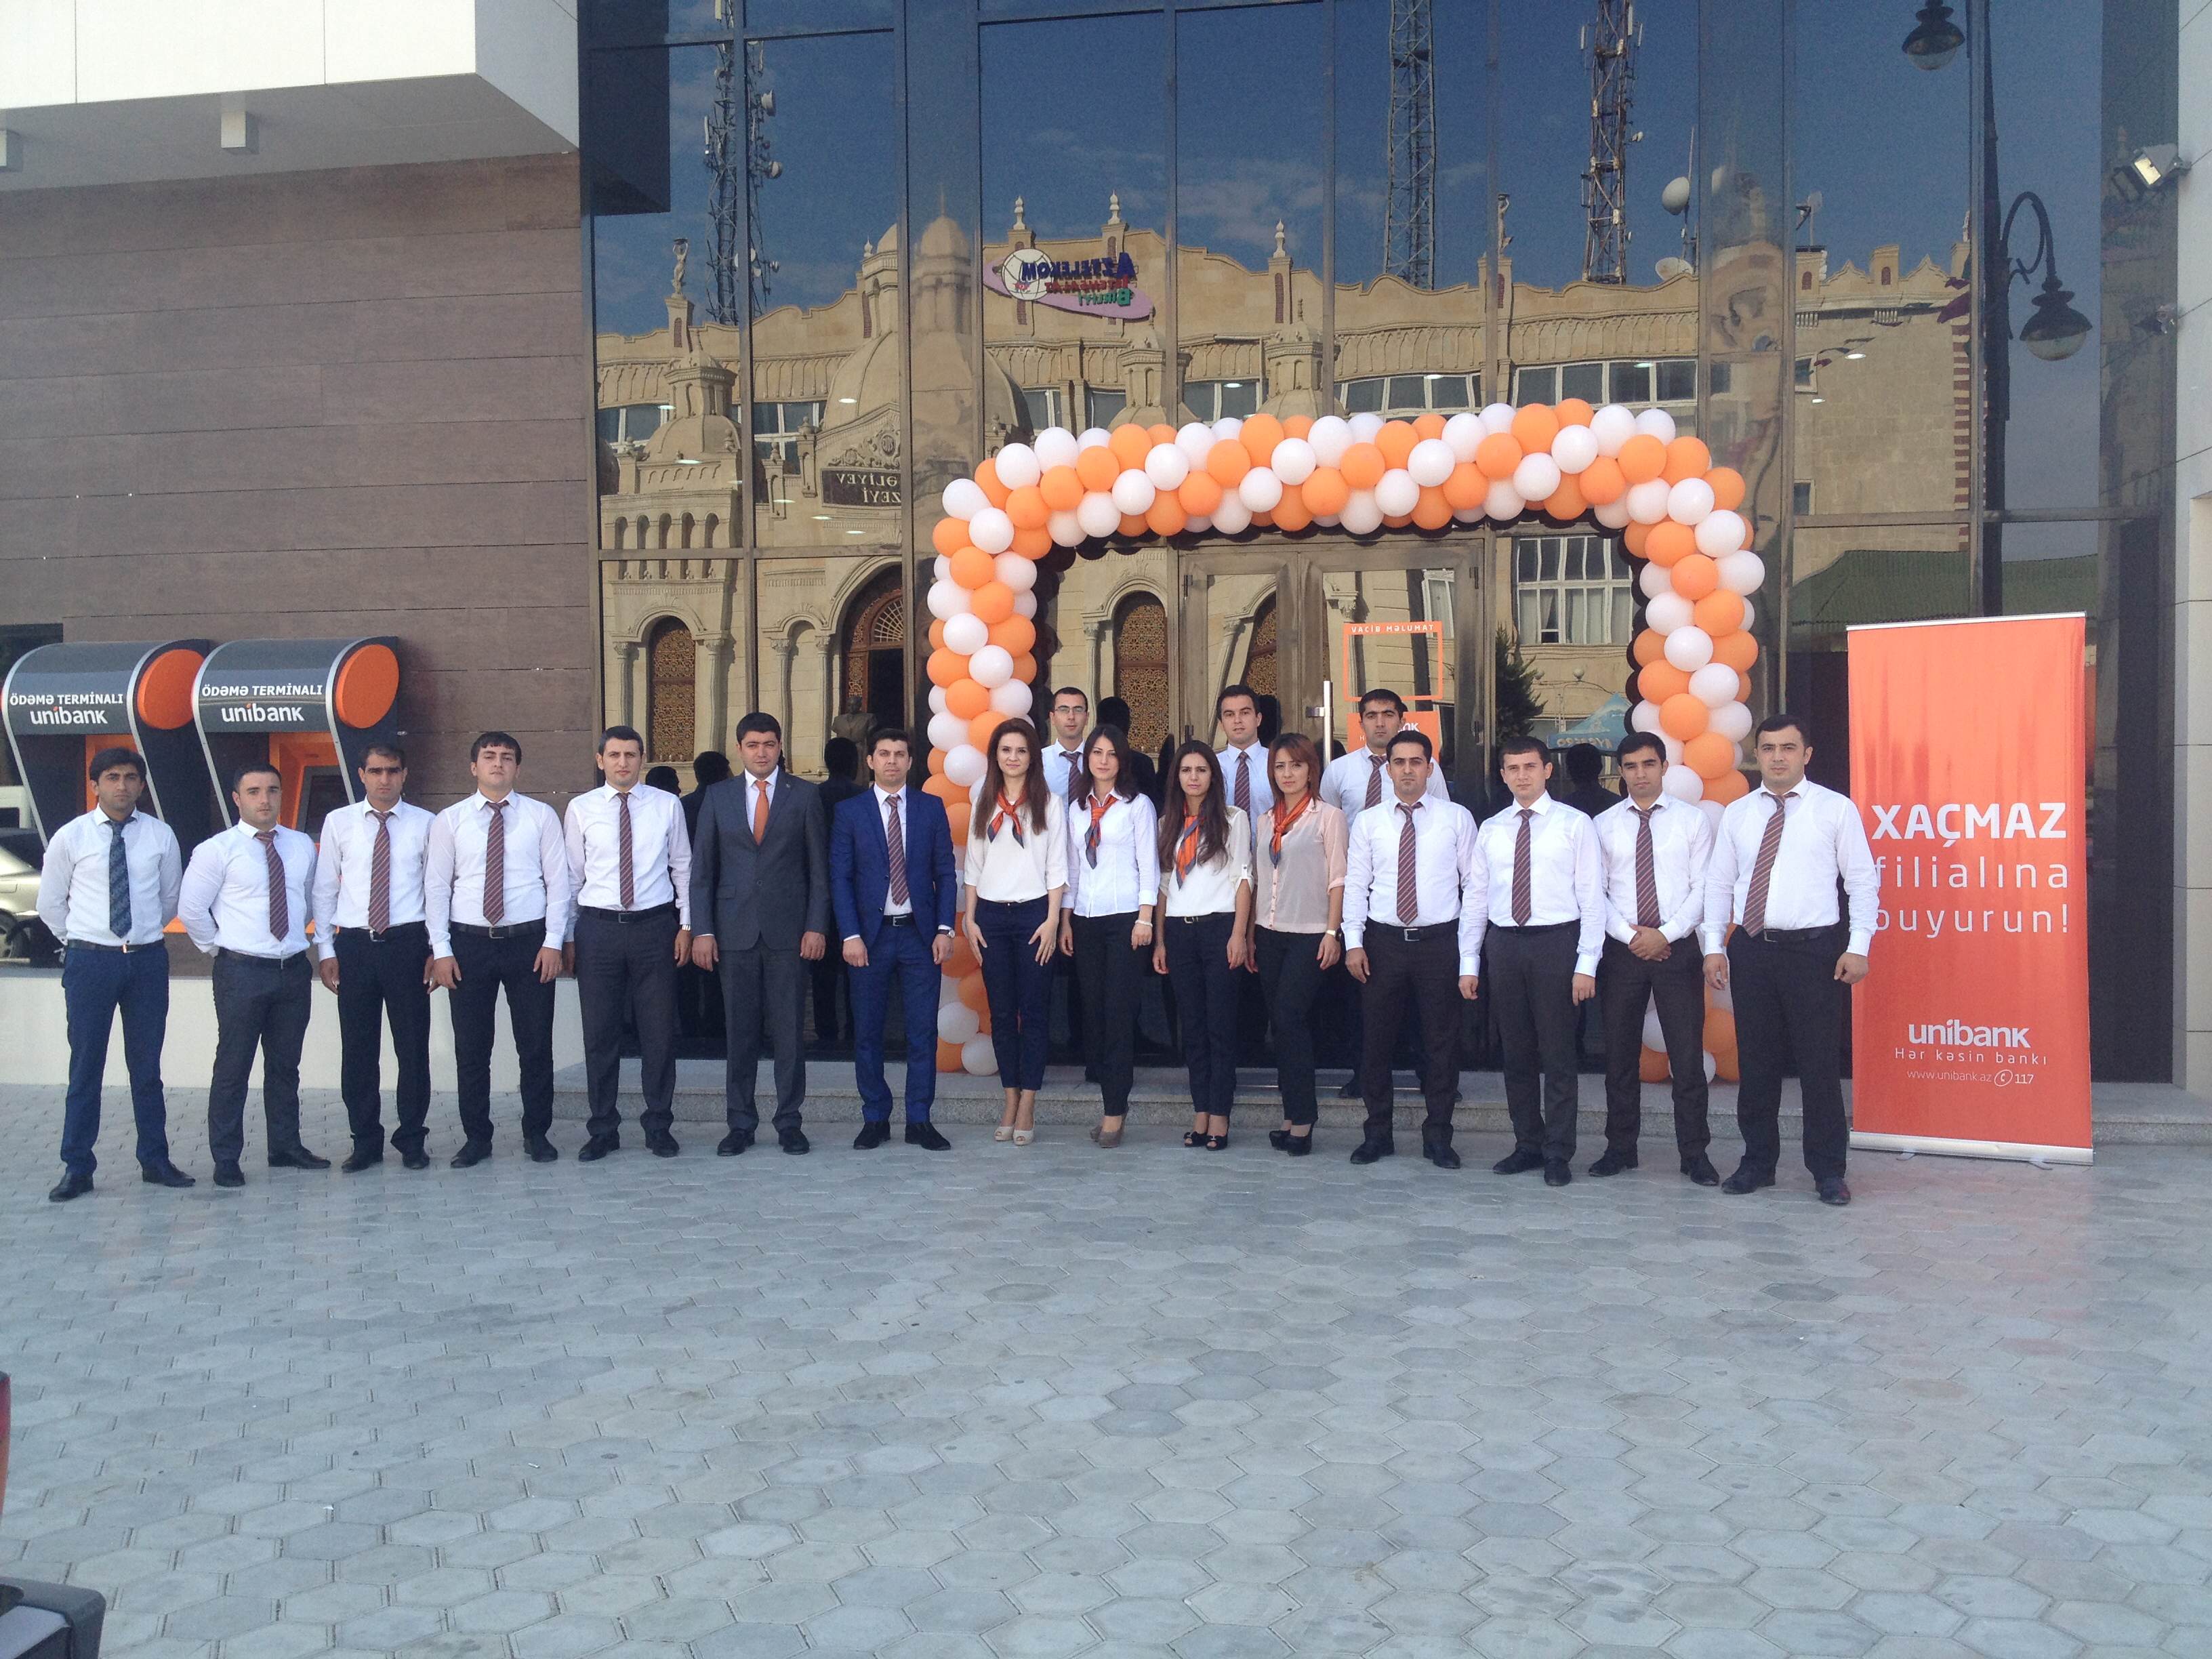 Unibank открыл филиал в г.Хачмаз